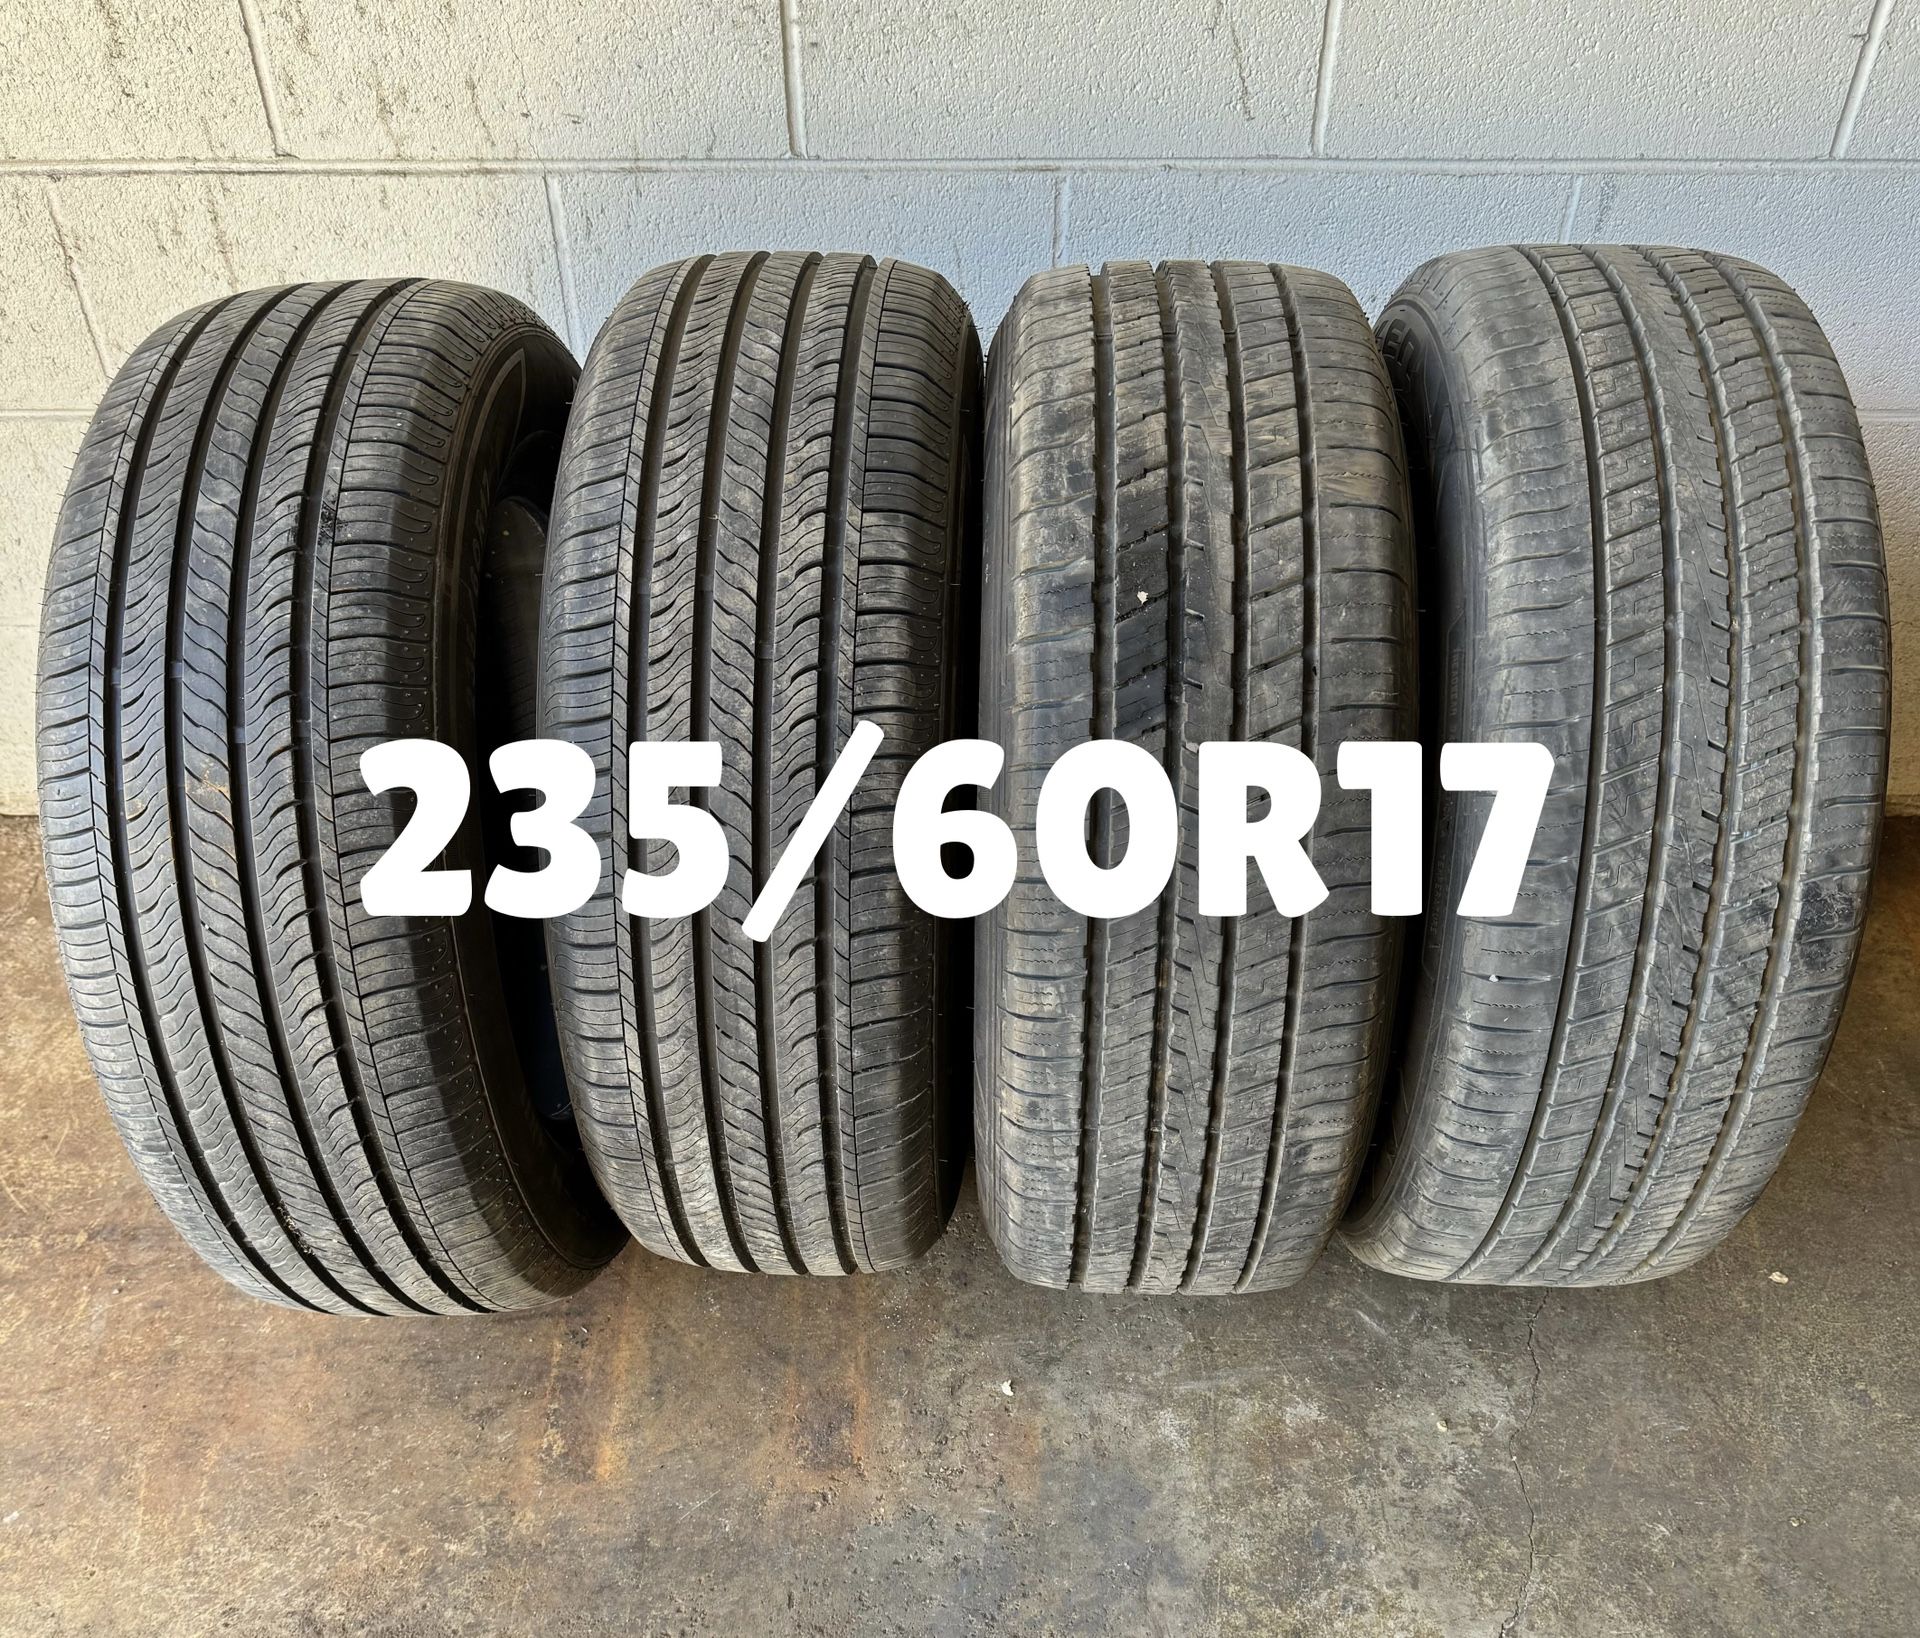 Four 235/60R17 Tires